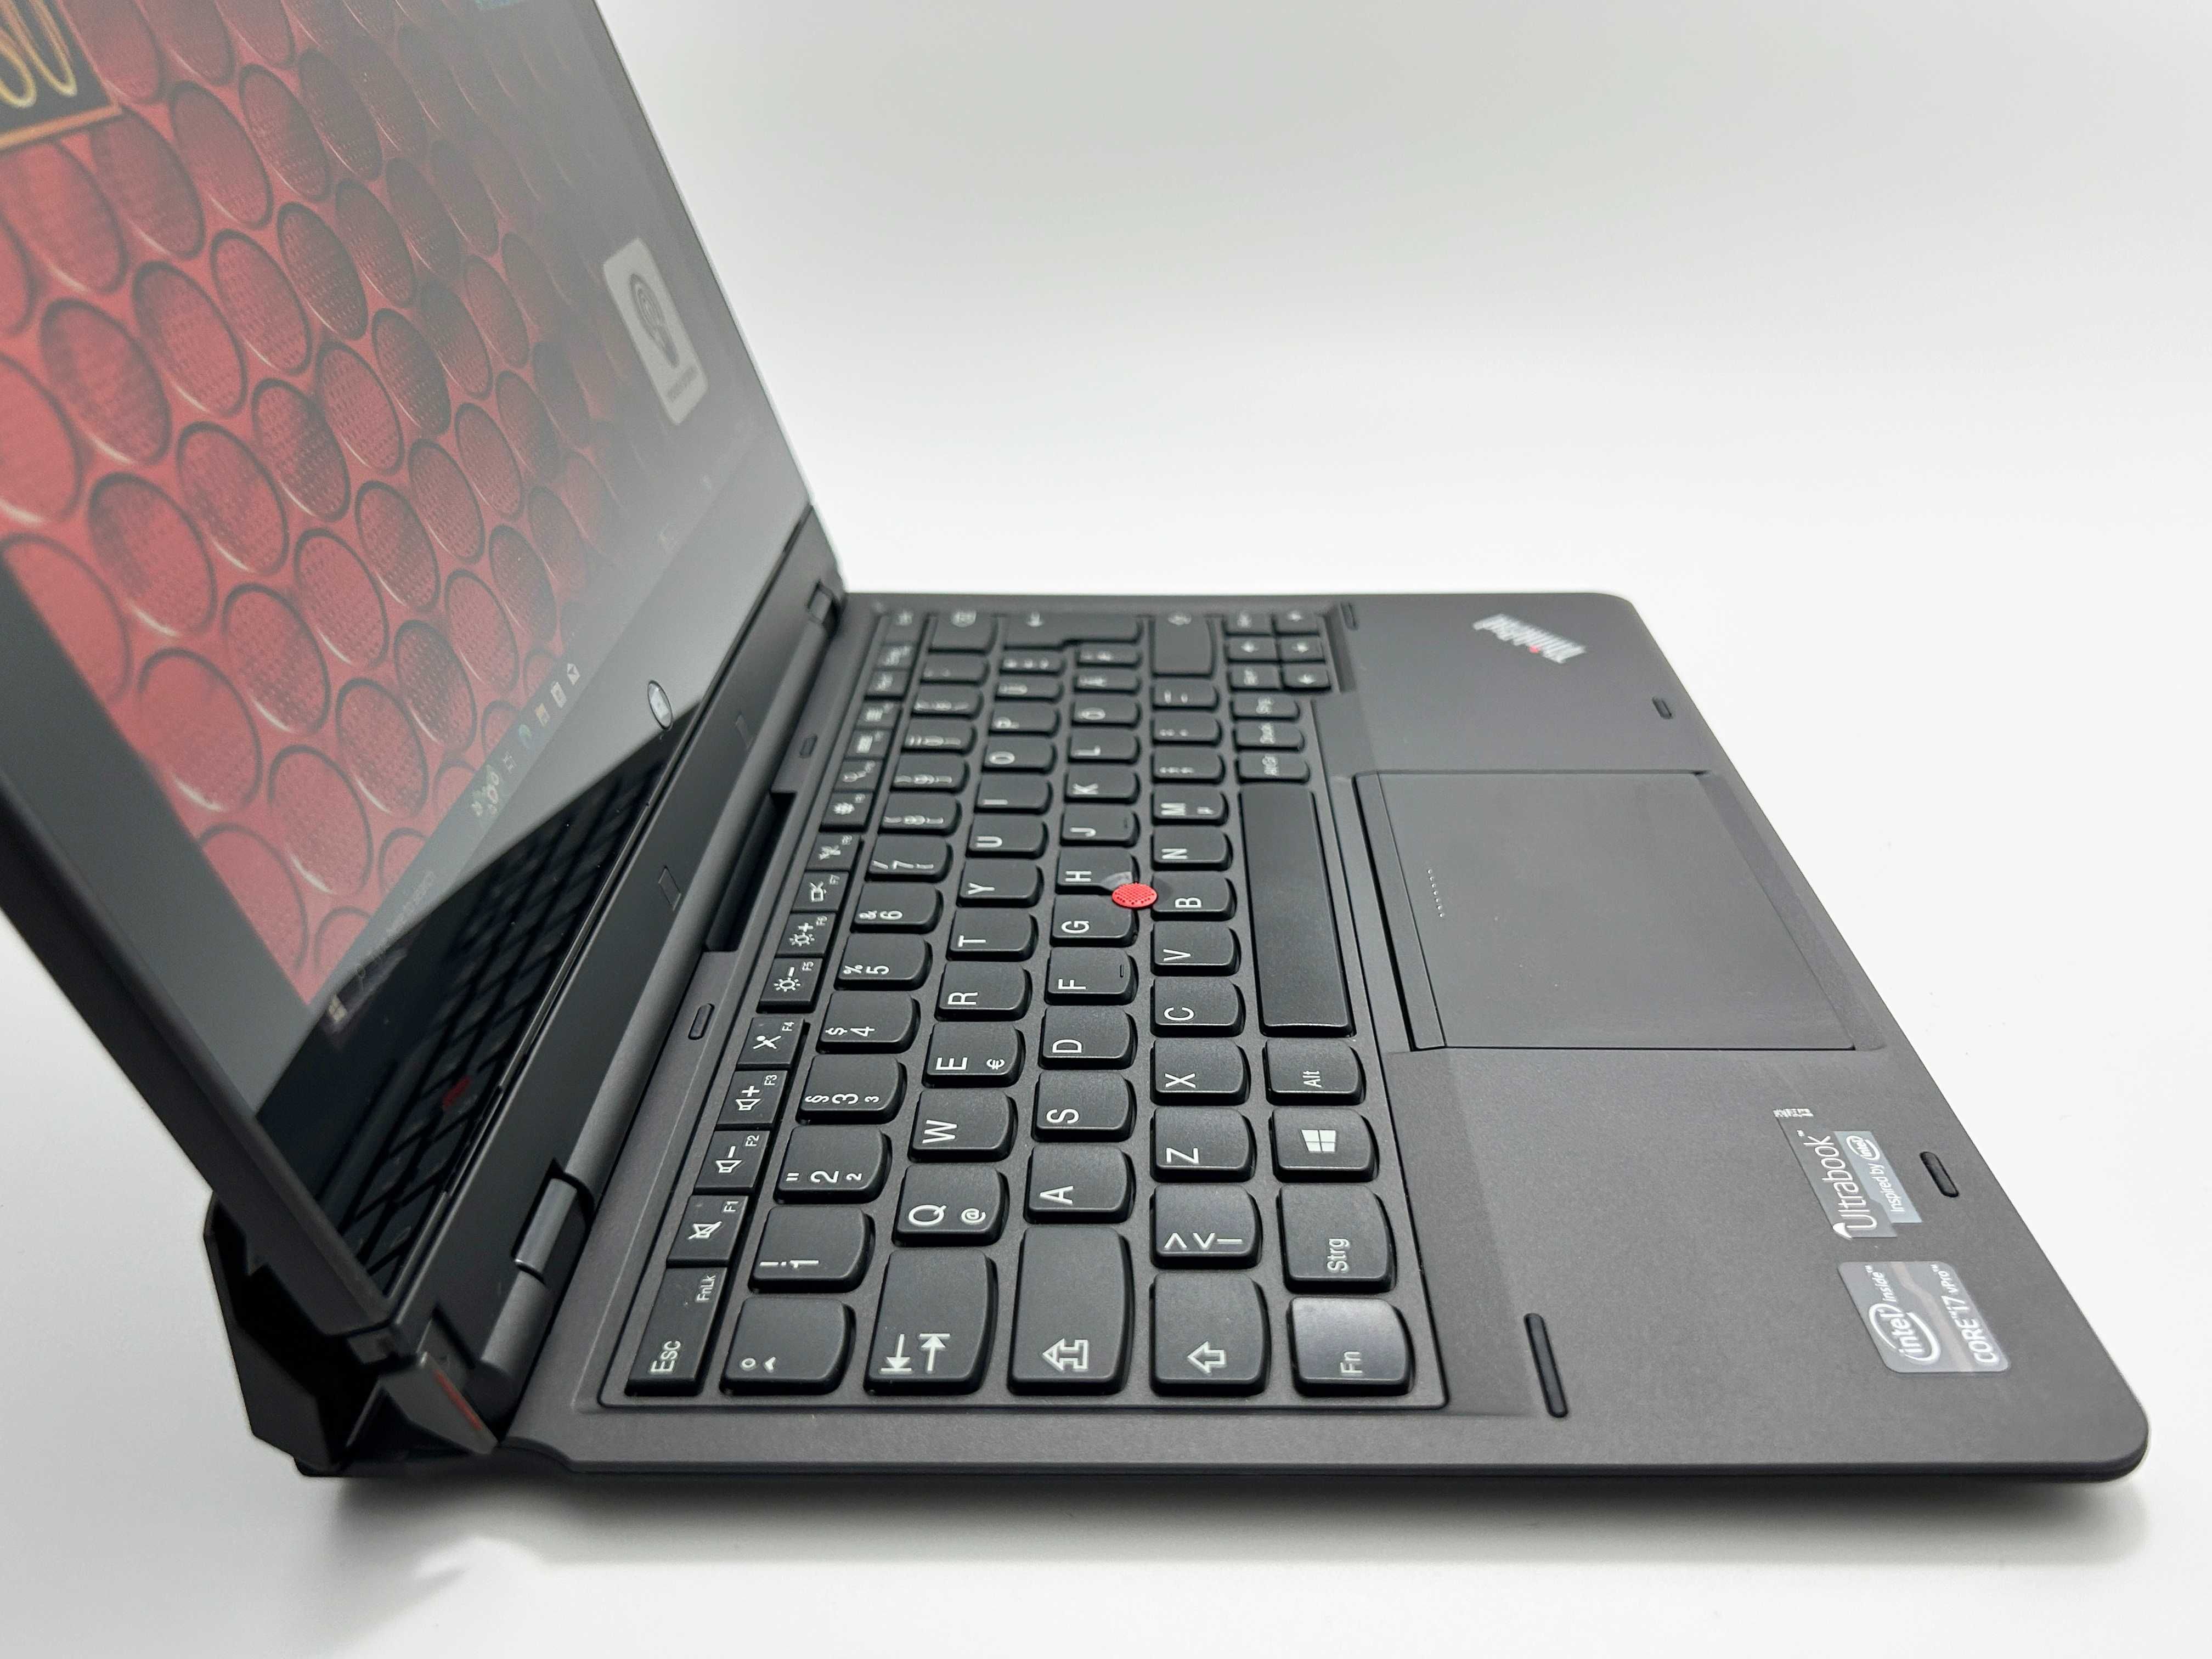 Laptop Lenovo Helix i7 8GB RAM 256 GB SSD Touchscreen TableMode CA NOU